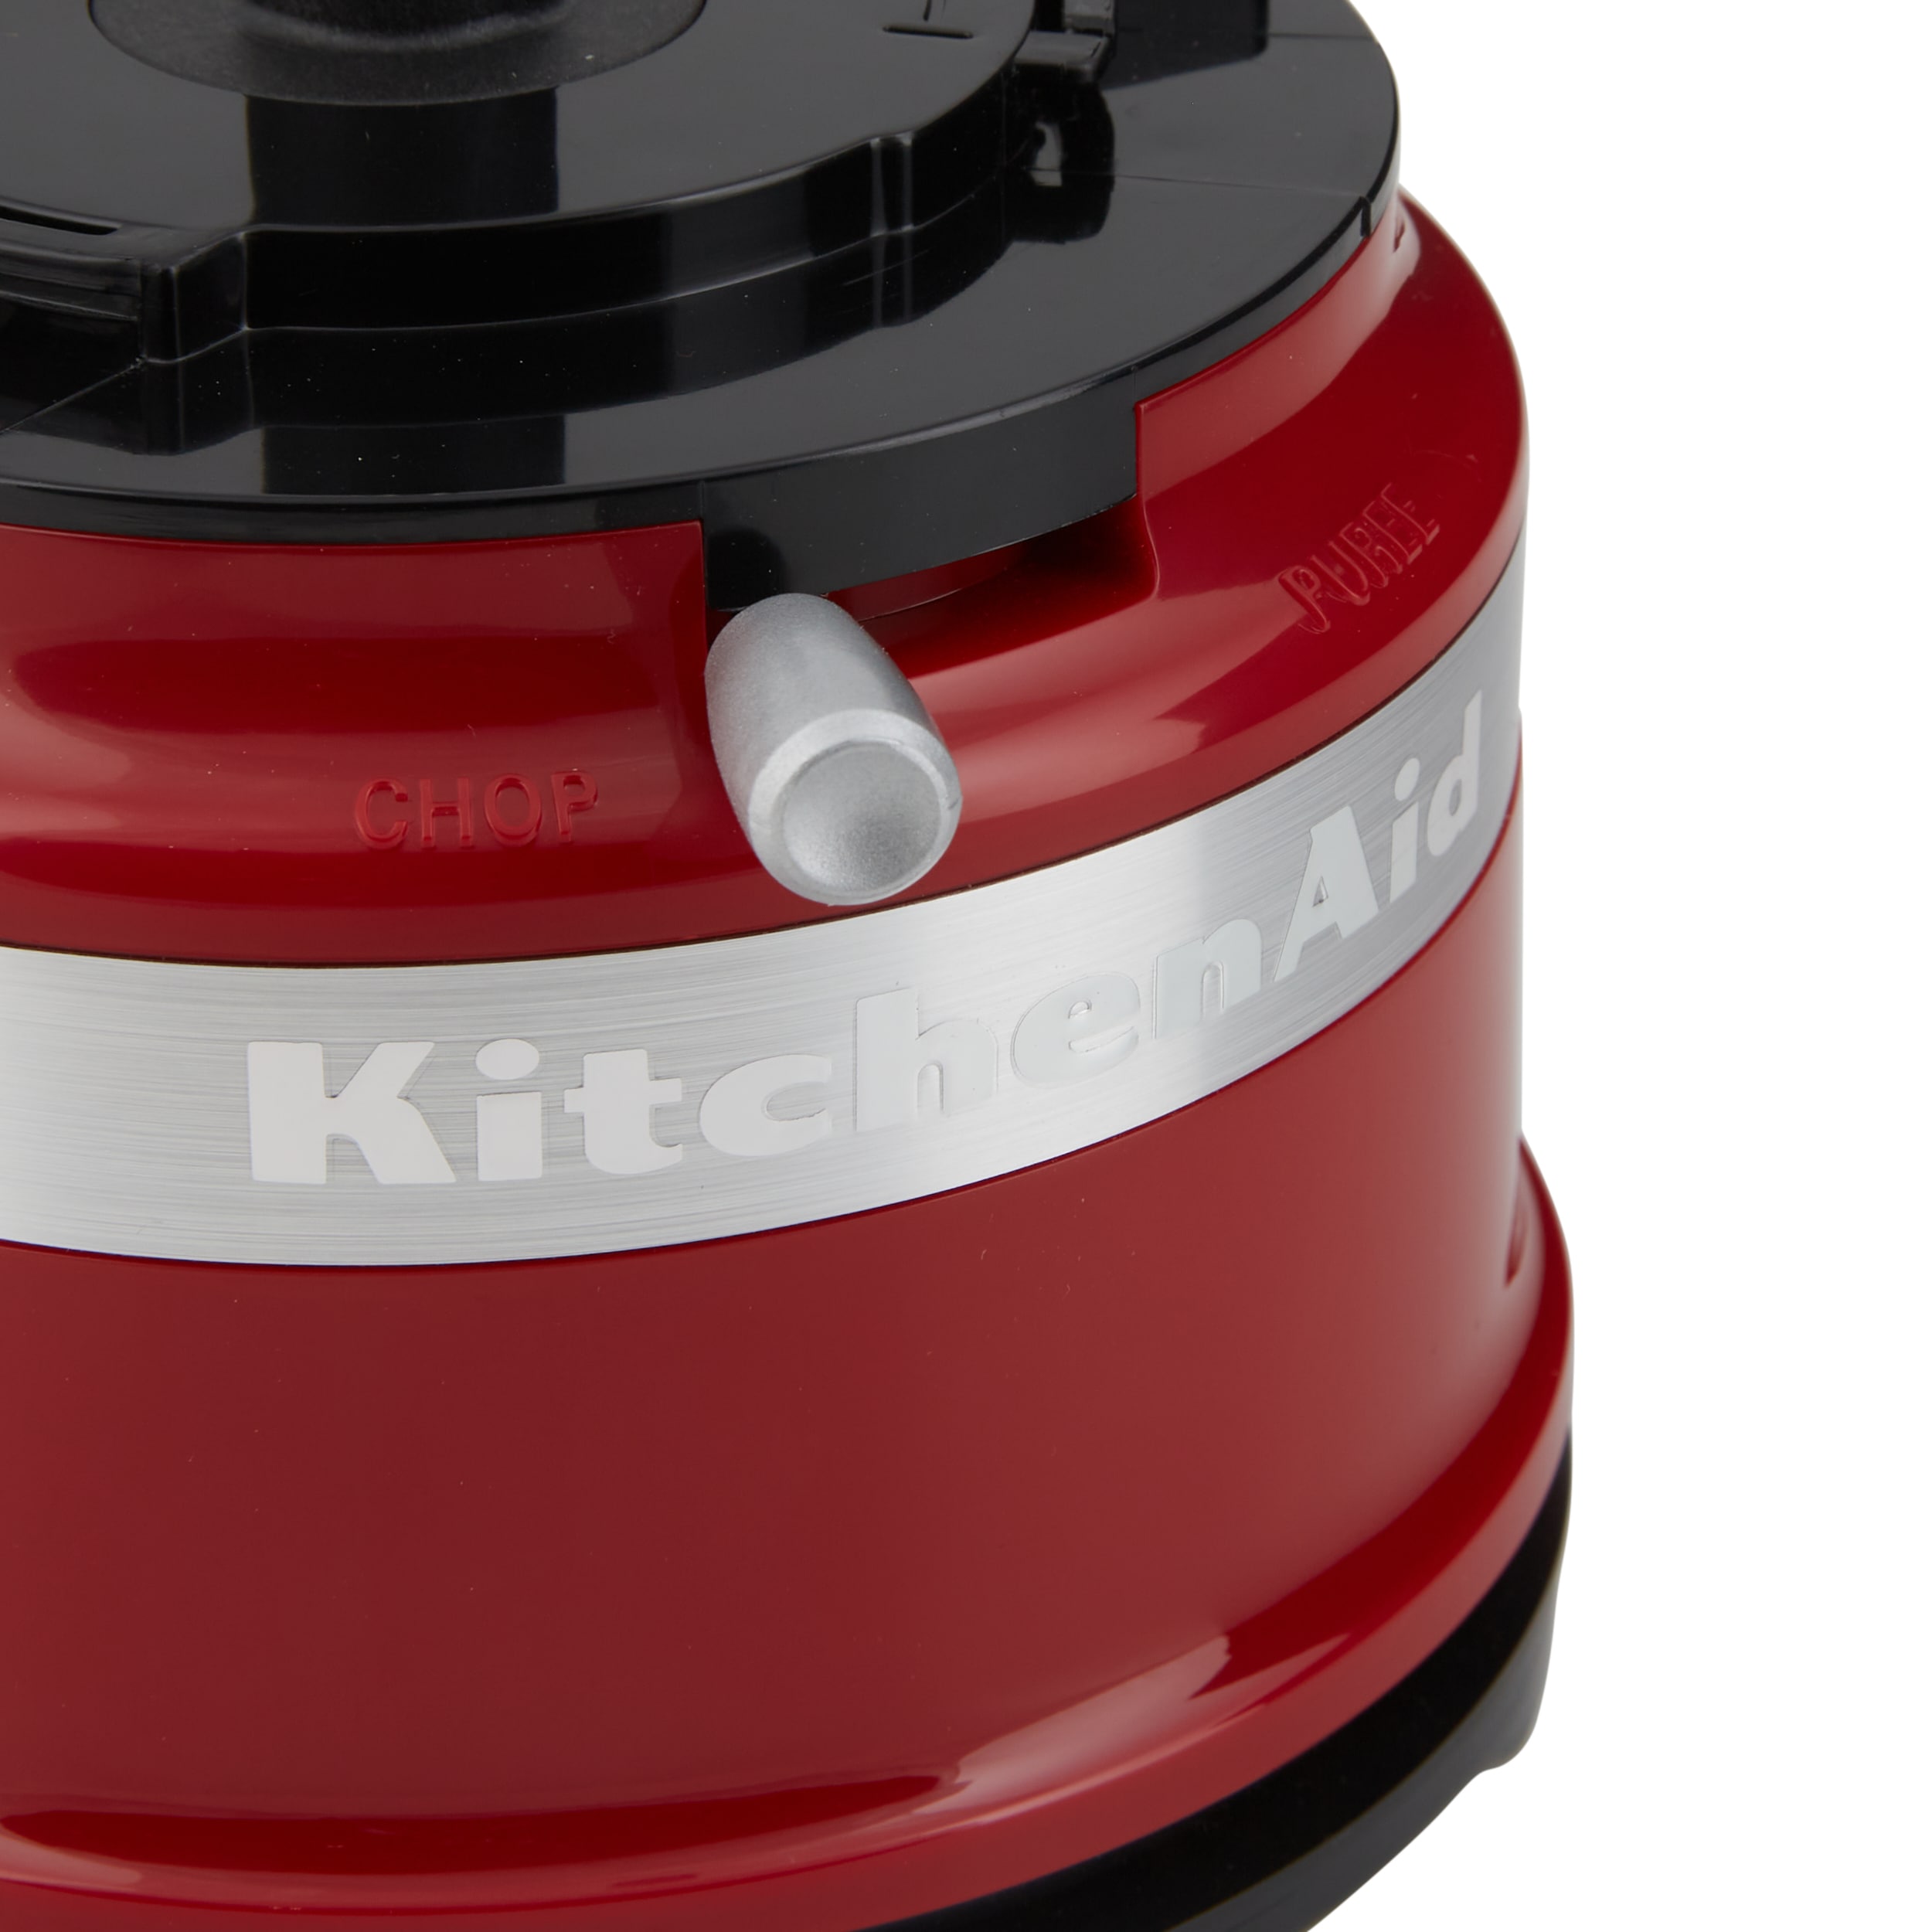 KitchenAid KFC3516ER 3.5 Cup Mini Food Processor - Empire Red